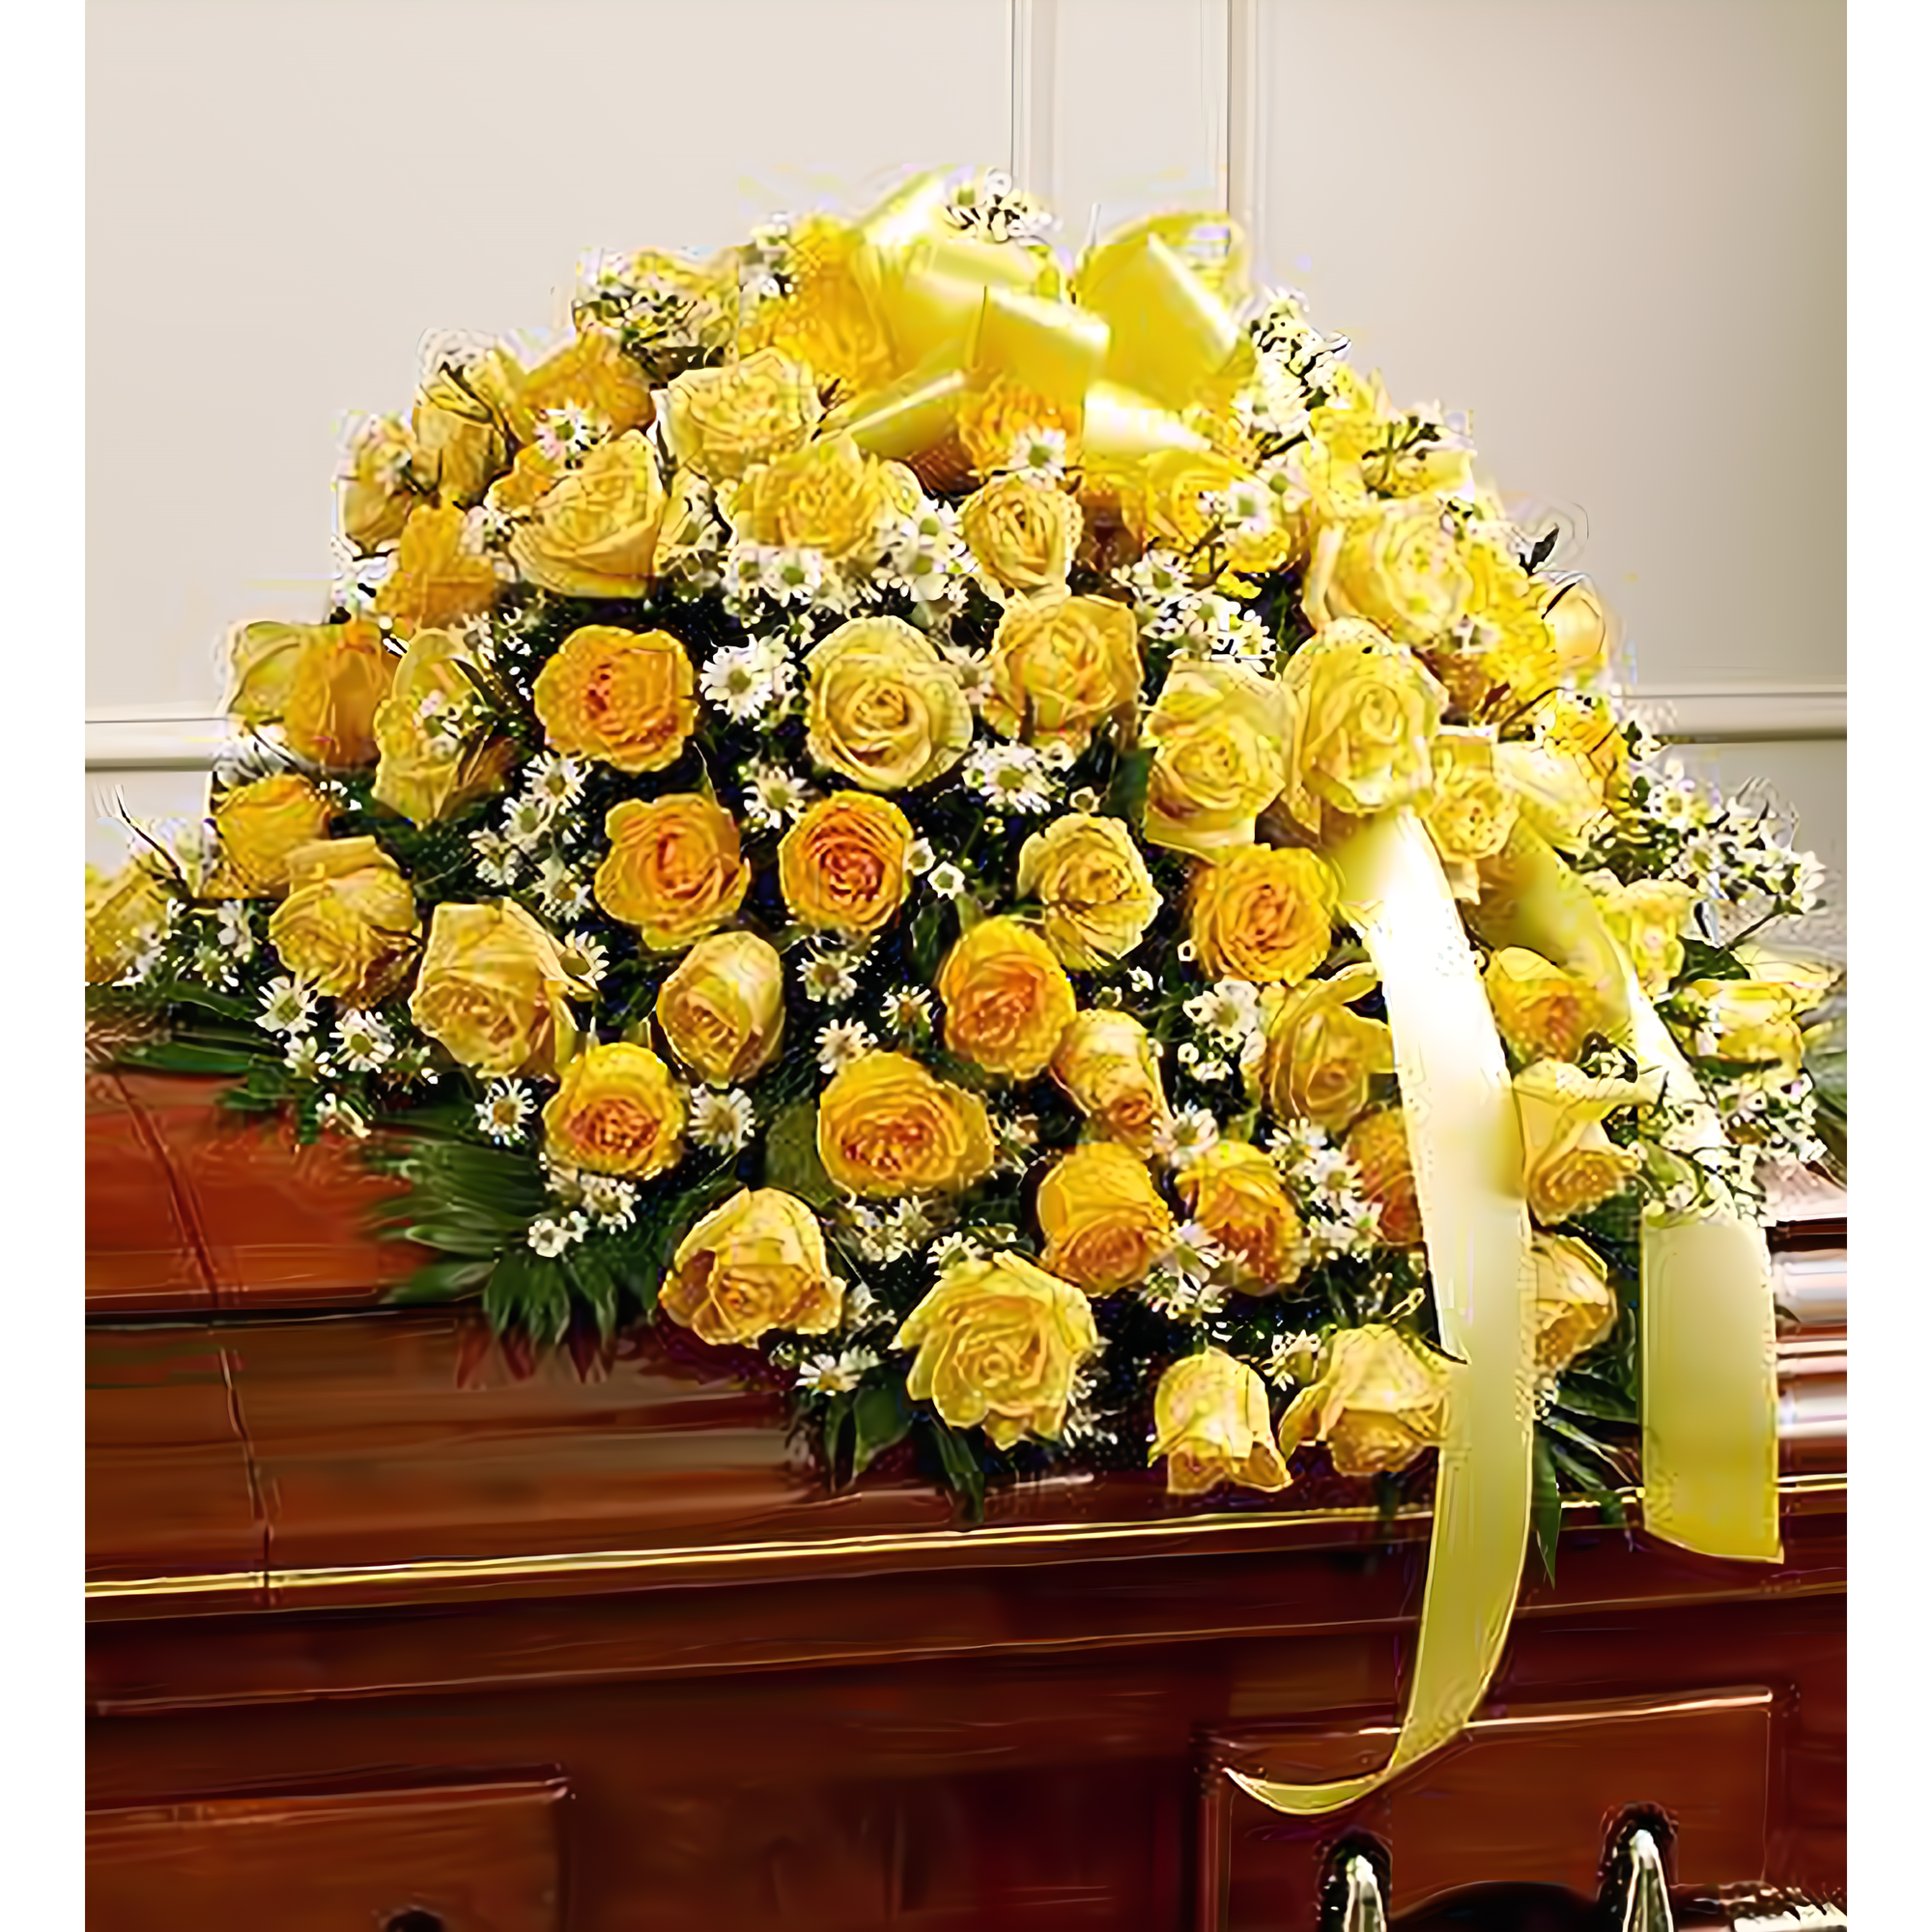 Cherished Memories Rose Half Casket Cover - Yellow - Funeral > Casket Sprays